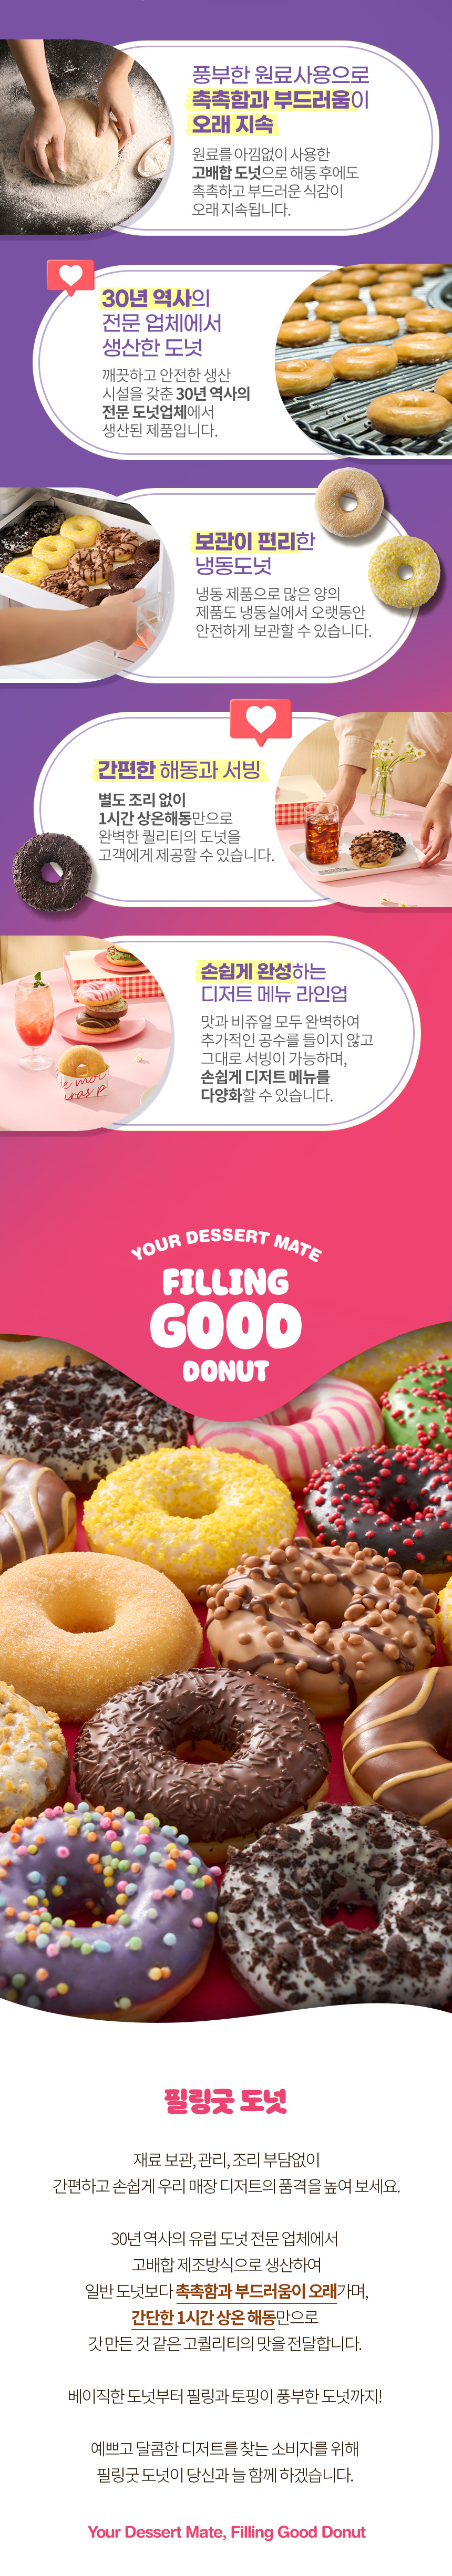 Filing_Good_Donut_Triple_choco_02